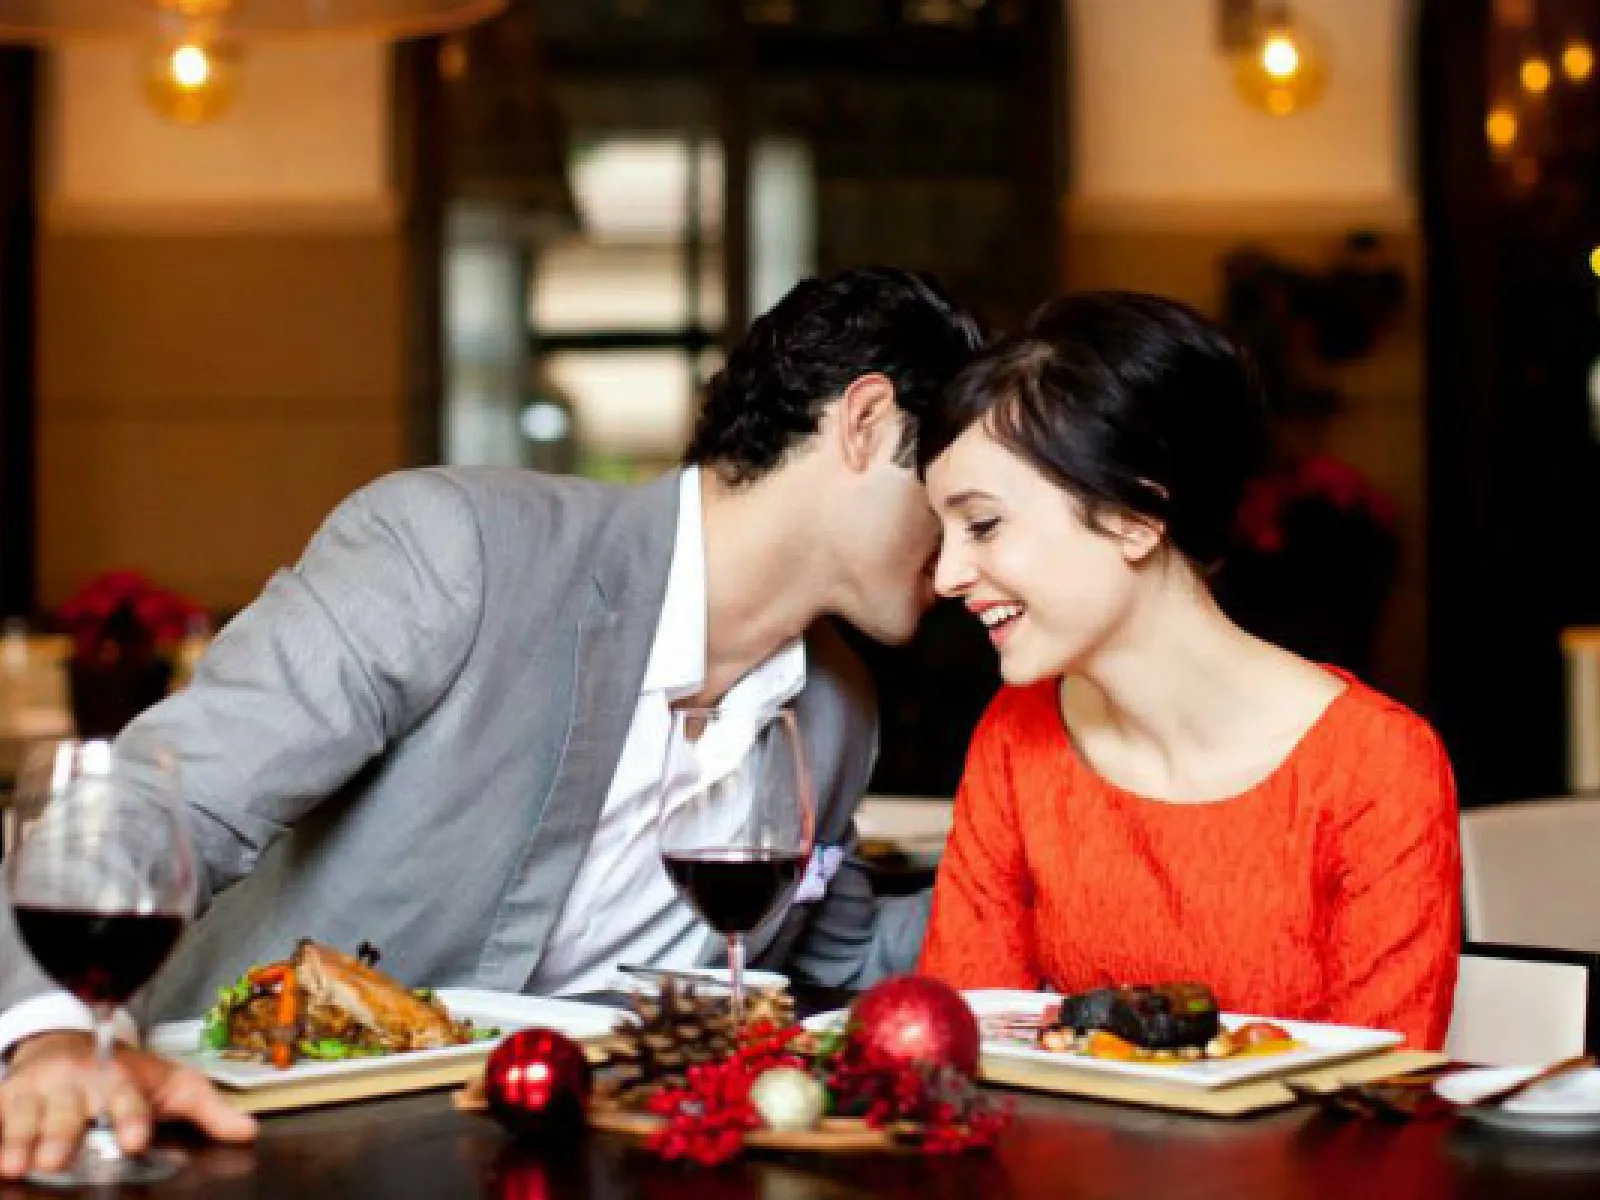 Ужин лишний. Романтический ужин. Романтический ужин в ресторане. ПП романтический ужин для двоих. Романтик в ресторане взрослая пара.